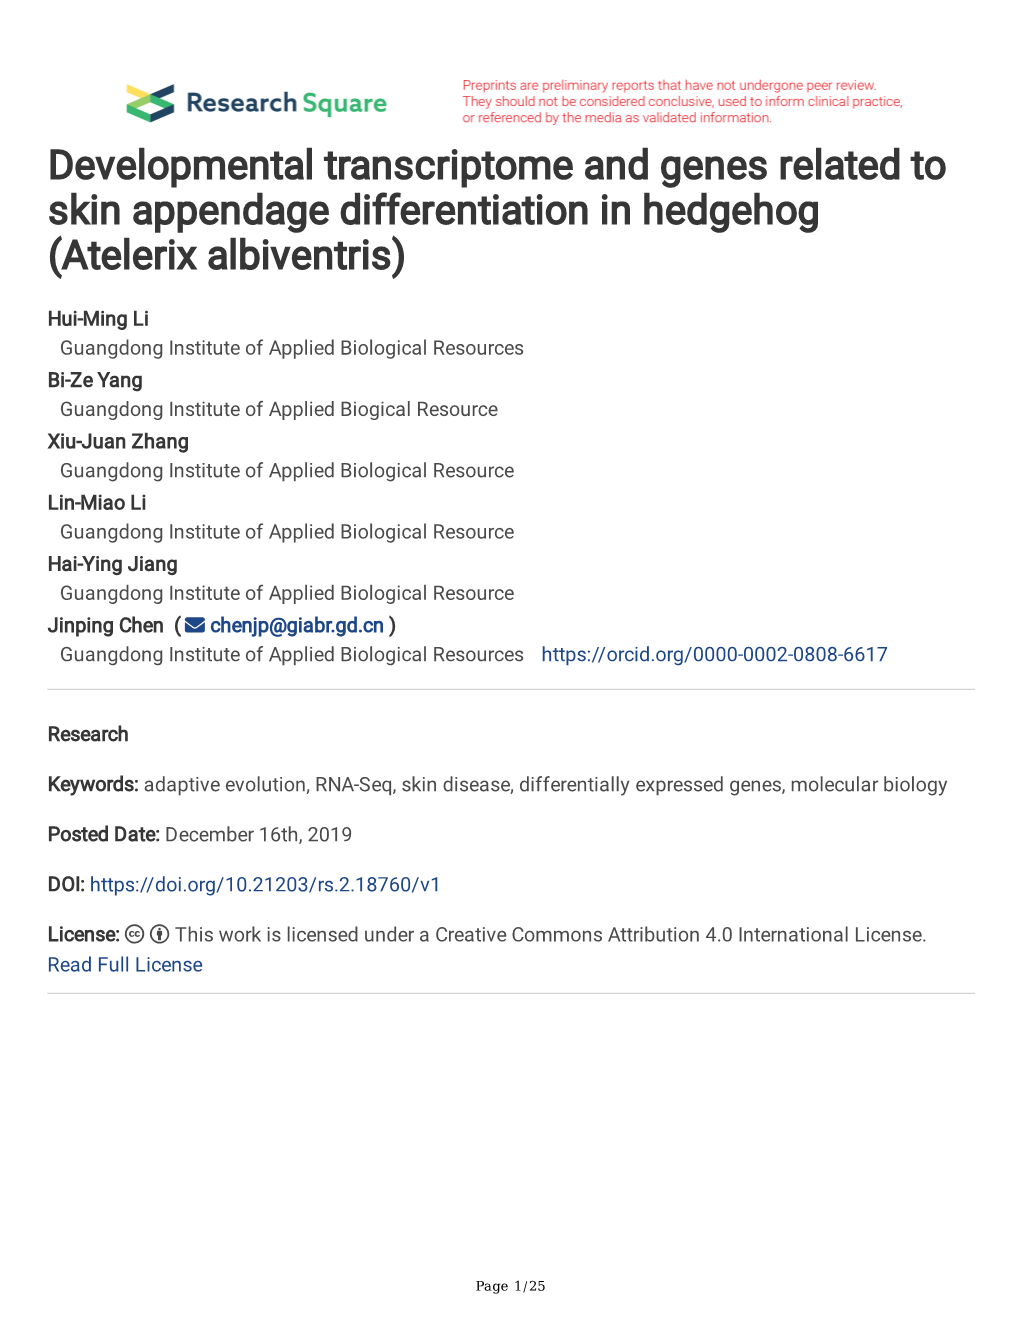 Developmental Transcriptome and Genes Related to Skin Appendage Differentiation in Hedgehog (Atelerix Albiventris)